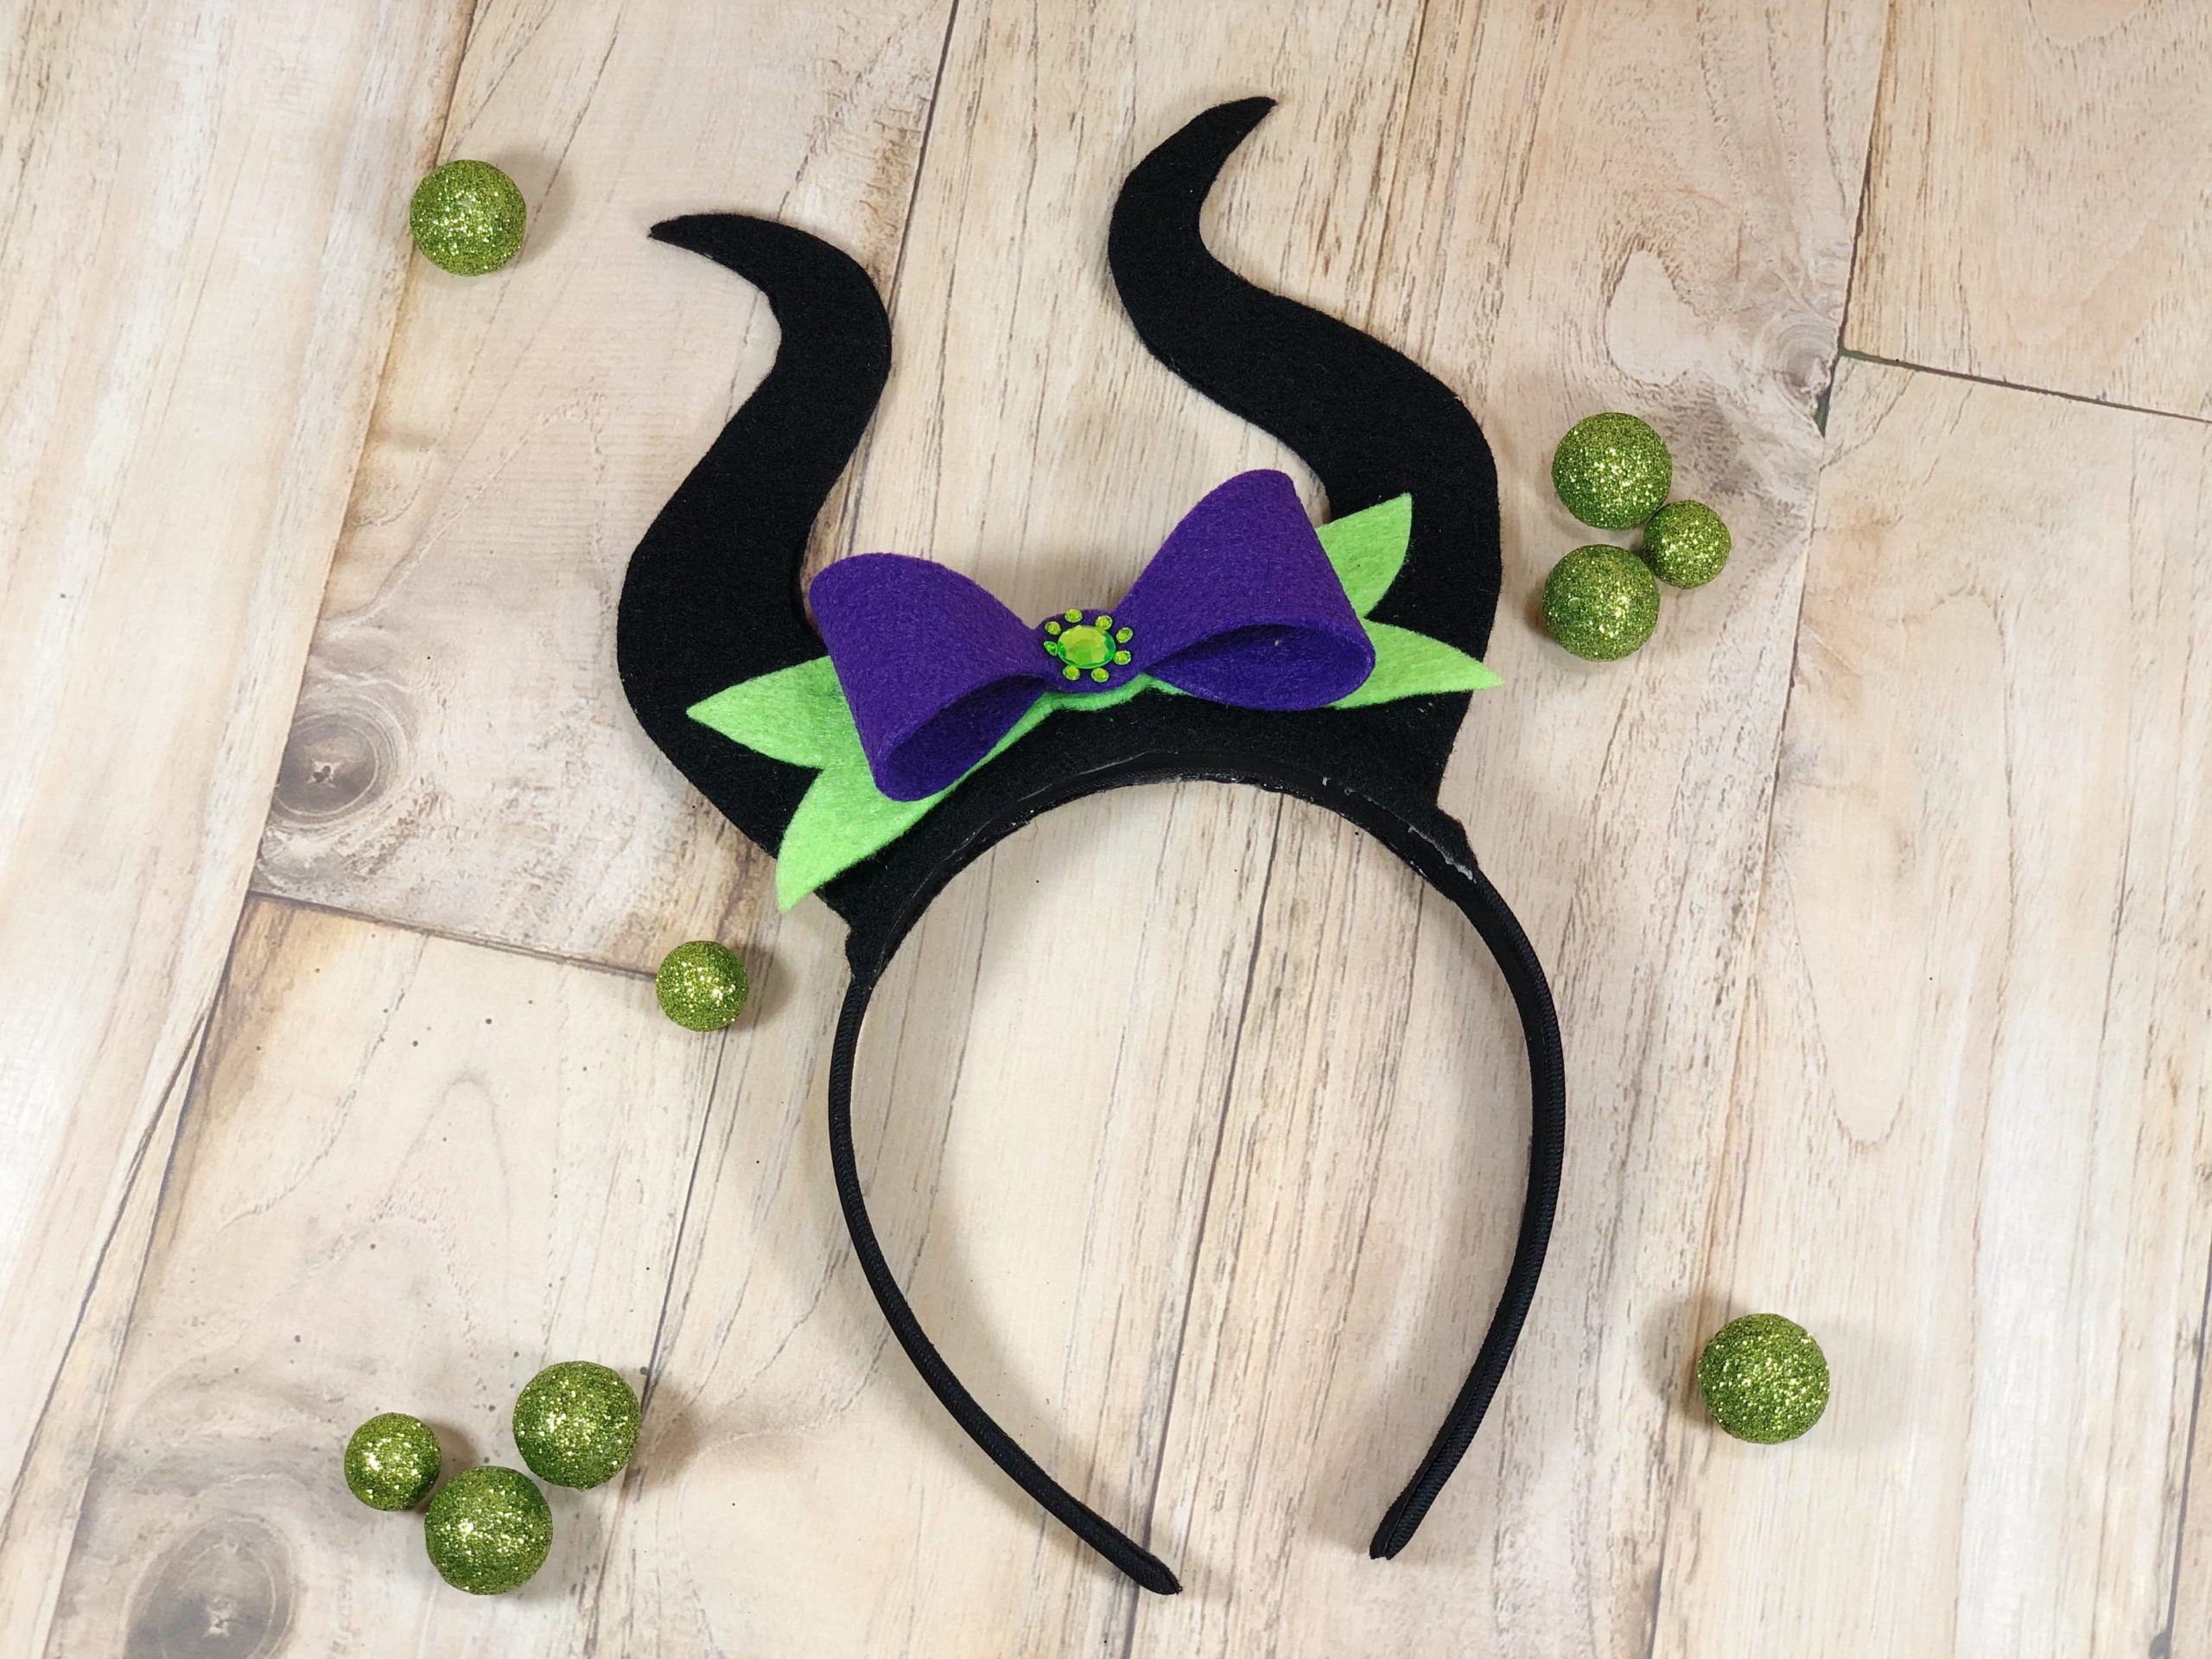 DIY No-Sew Felt Maleficent Headband Craft